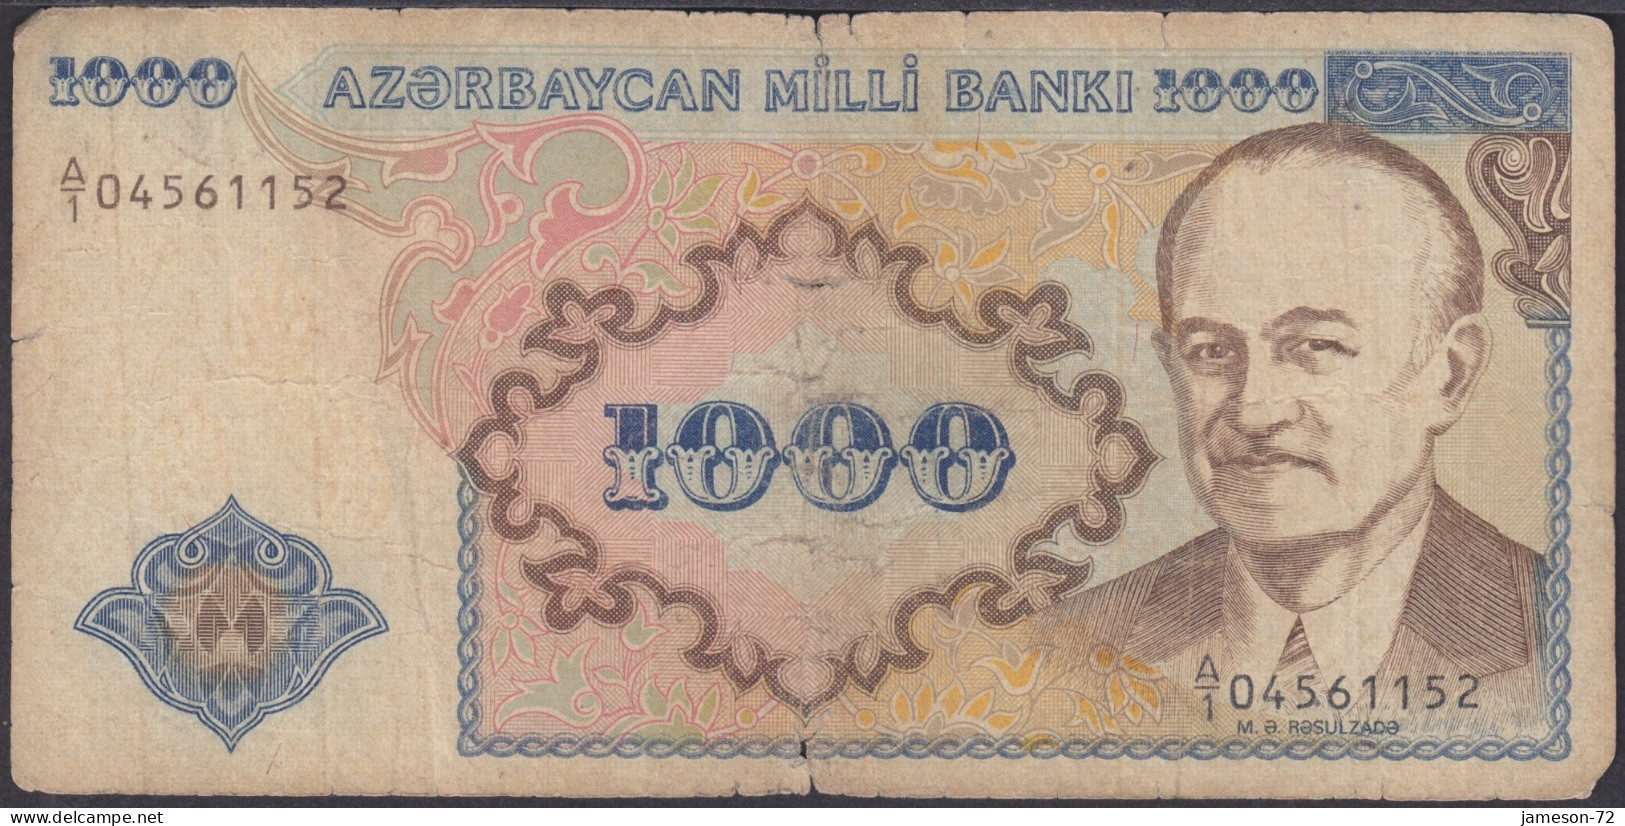 AZERBAIJAN - 1000 Manat ND (1993) P# 20 Asia Banknote - Edelweiss Coins - Azerbaïdjan